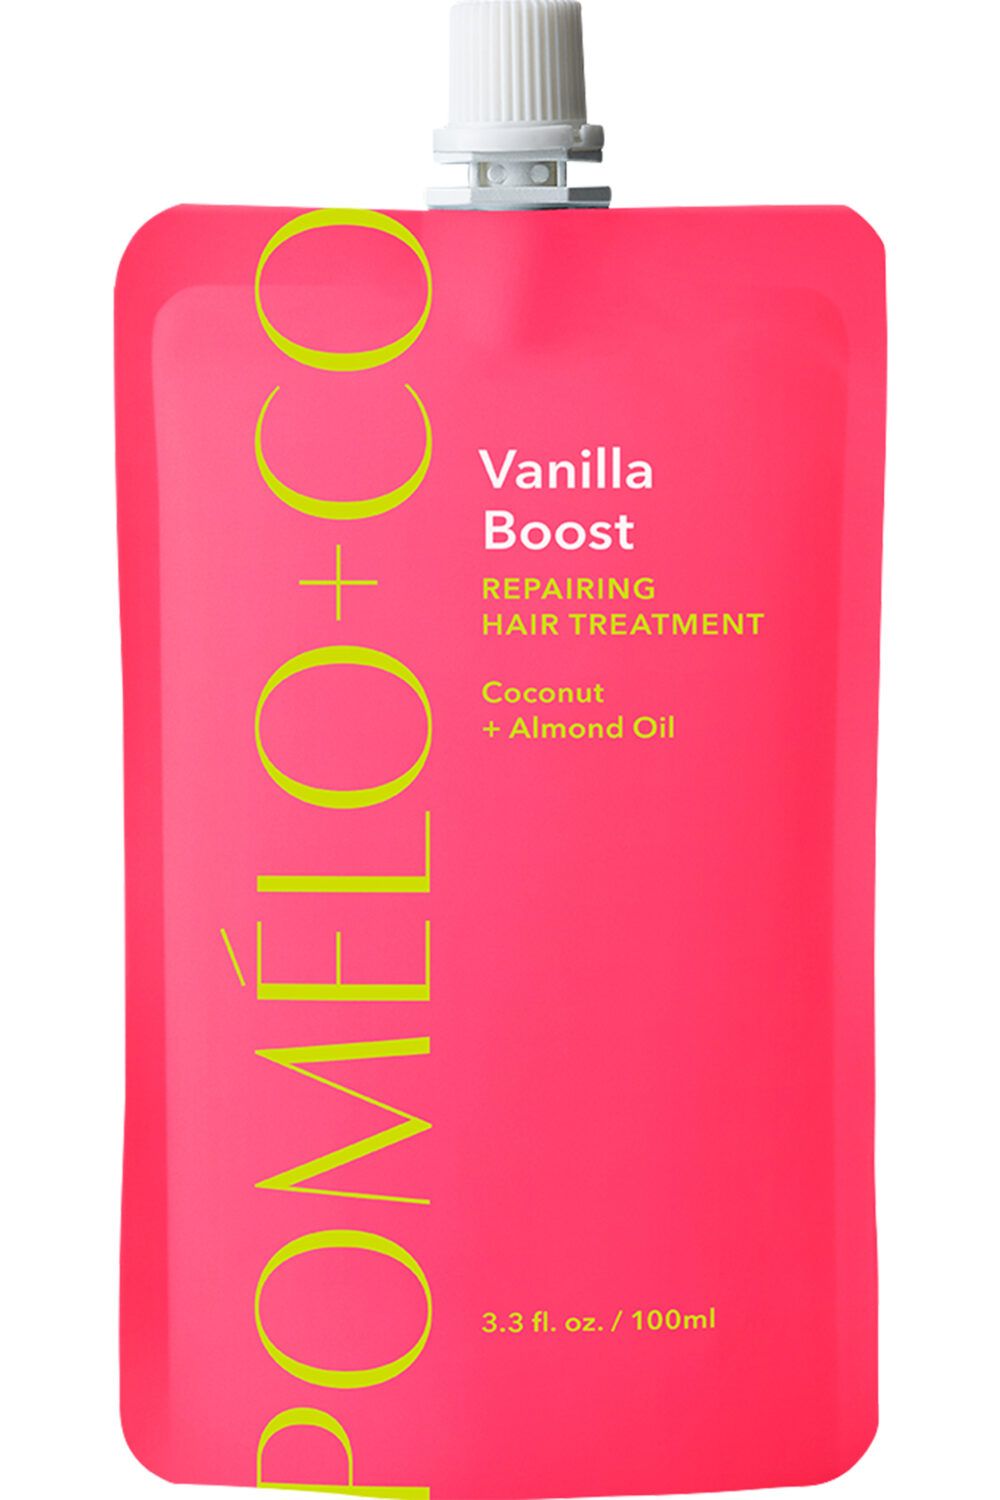 Pomélo+Co - Masque nourrissant Vanilla Boost